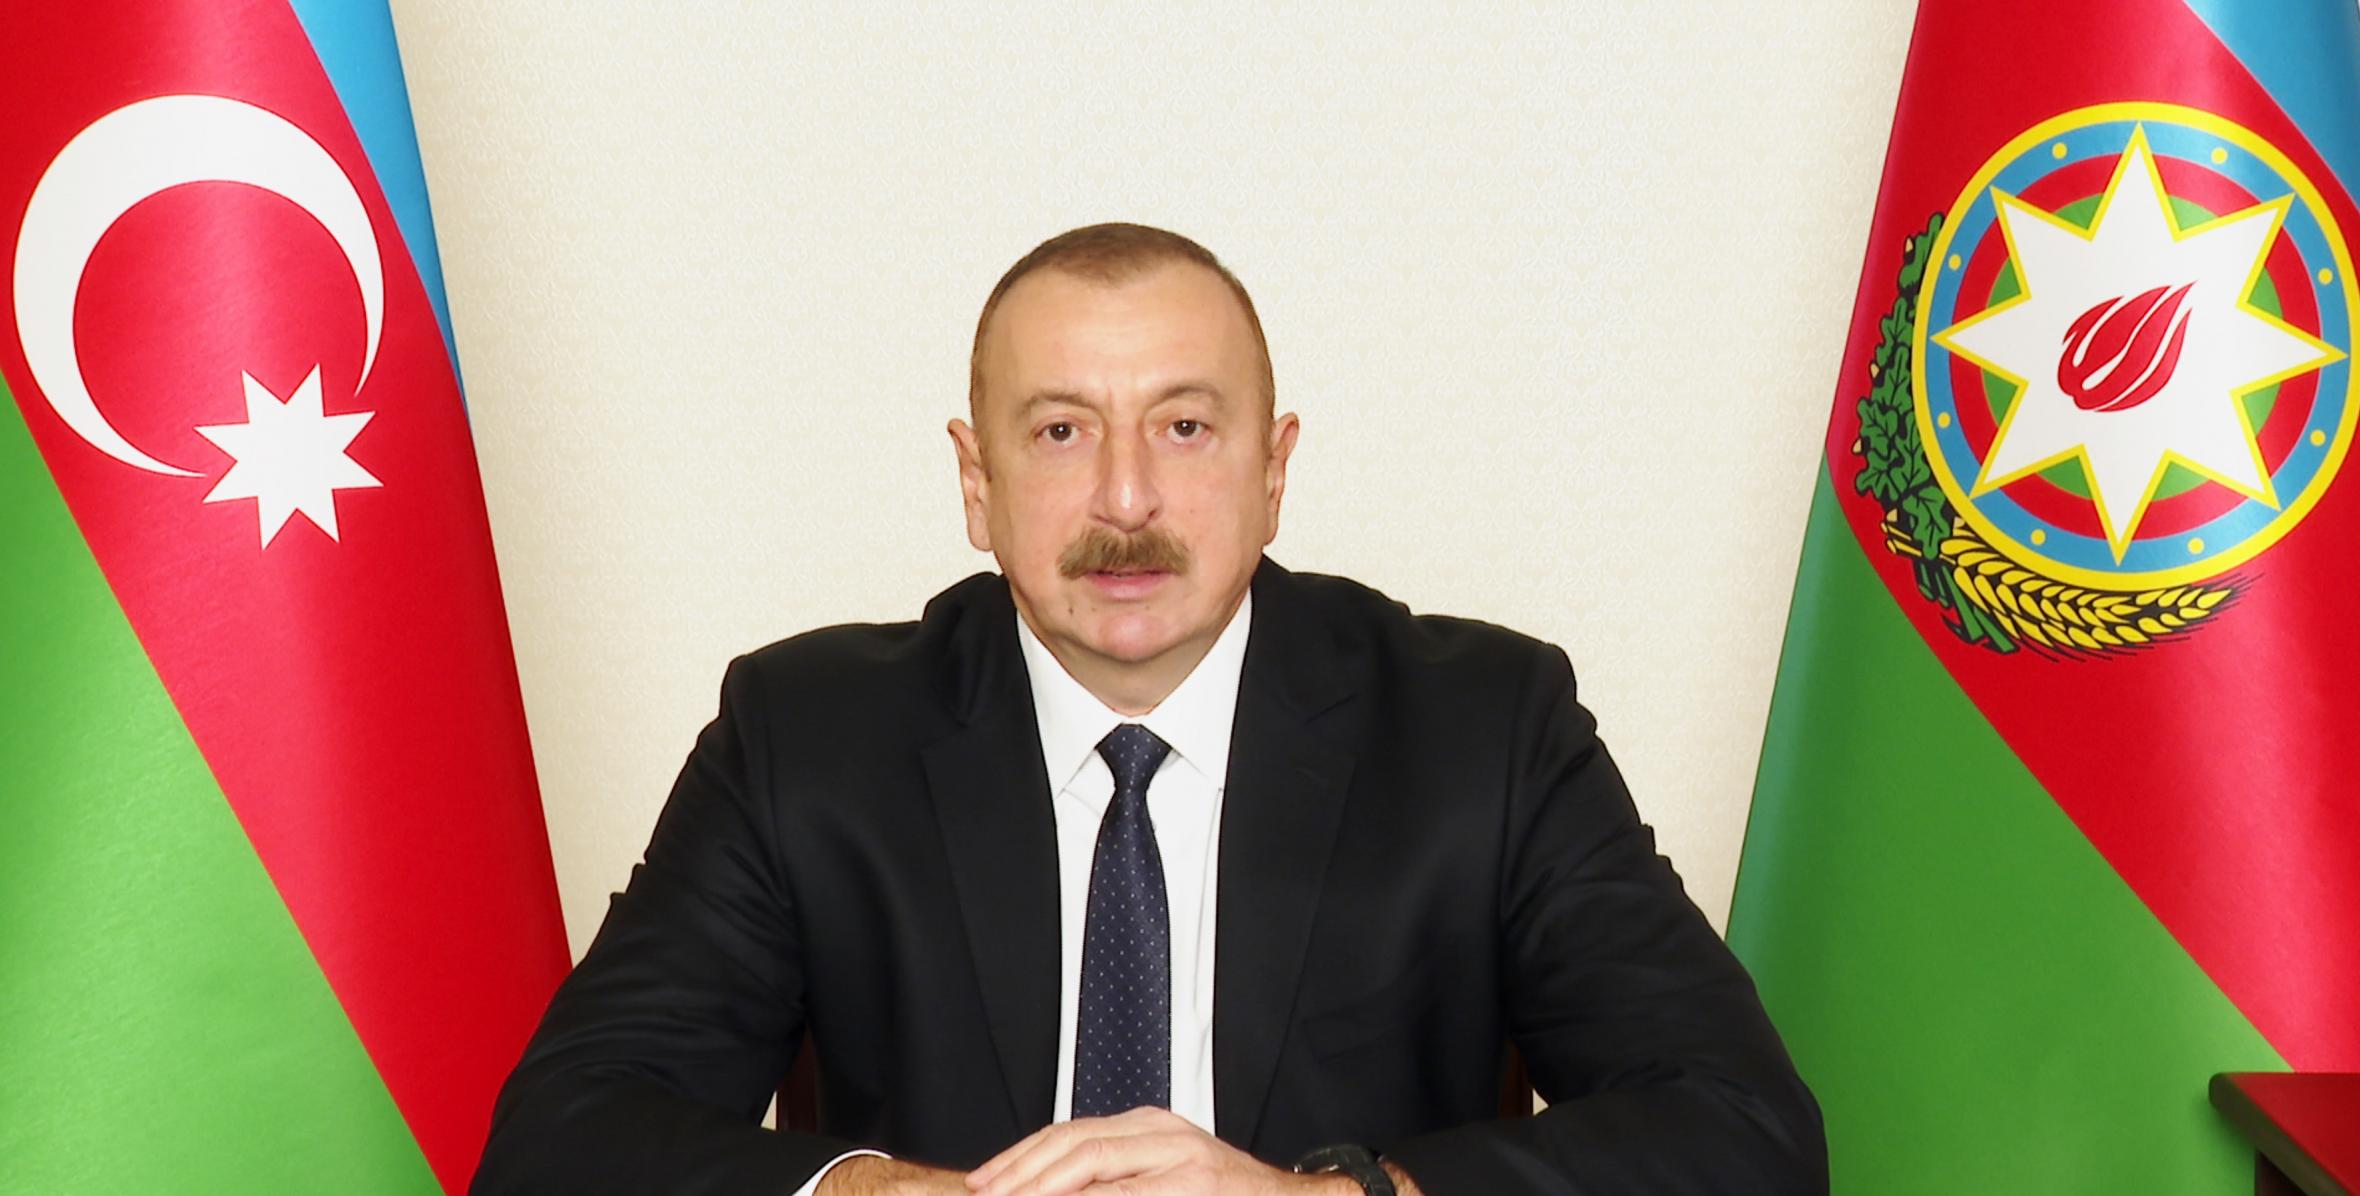 Ilham Aliyev has addressed the nation